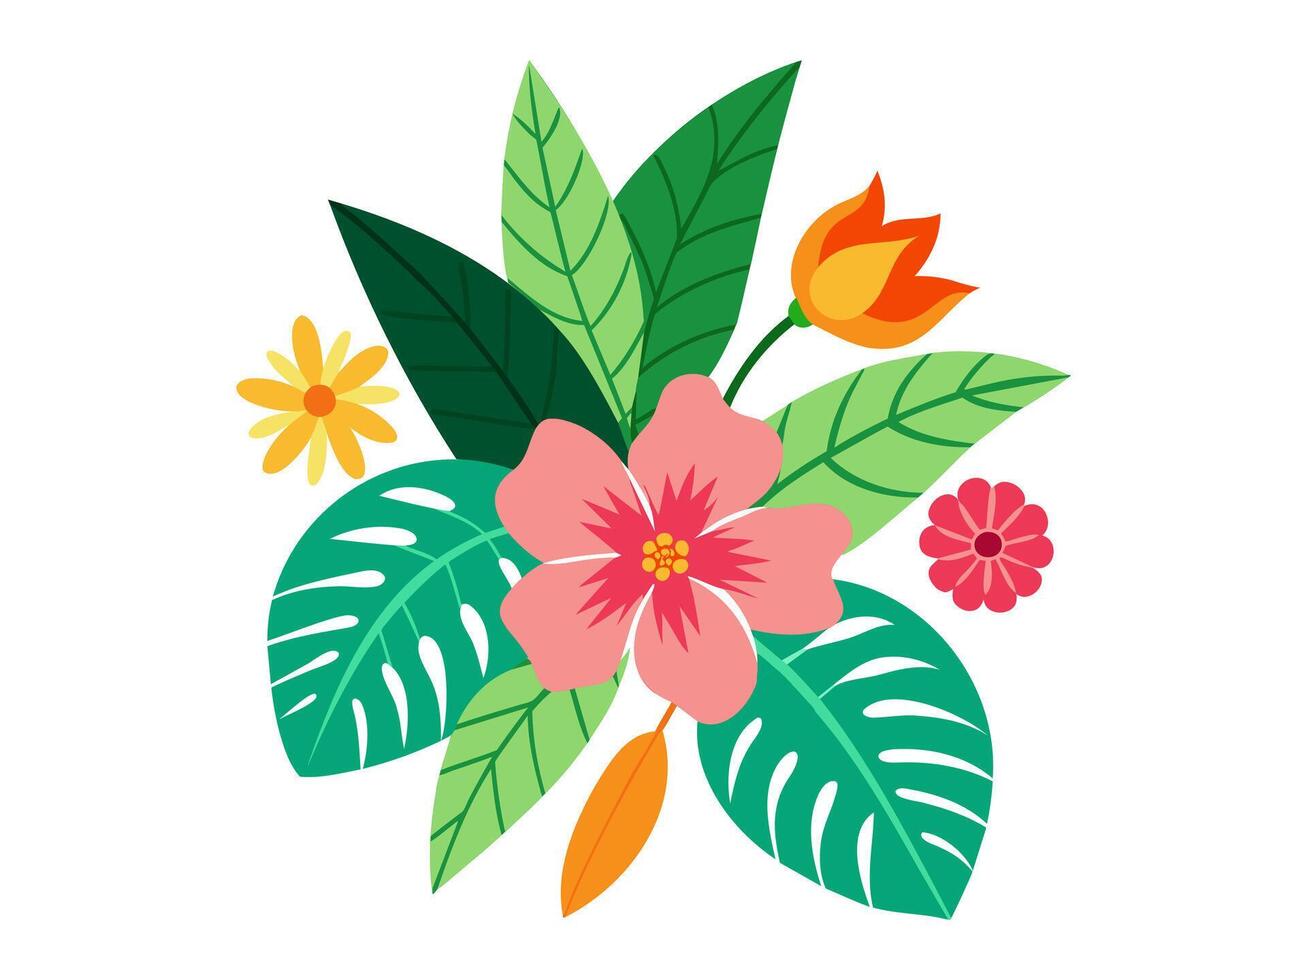 tropical flores y hojas ilustración. exótico flora Arte con vibrante colores. concepto de tropical naturaleza, botánica, exótico plantas, y verano vibras. aislado en blanco superficie vector